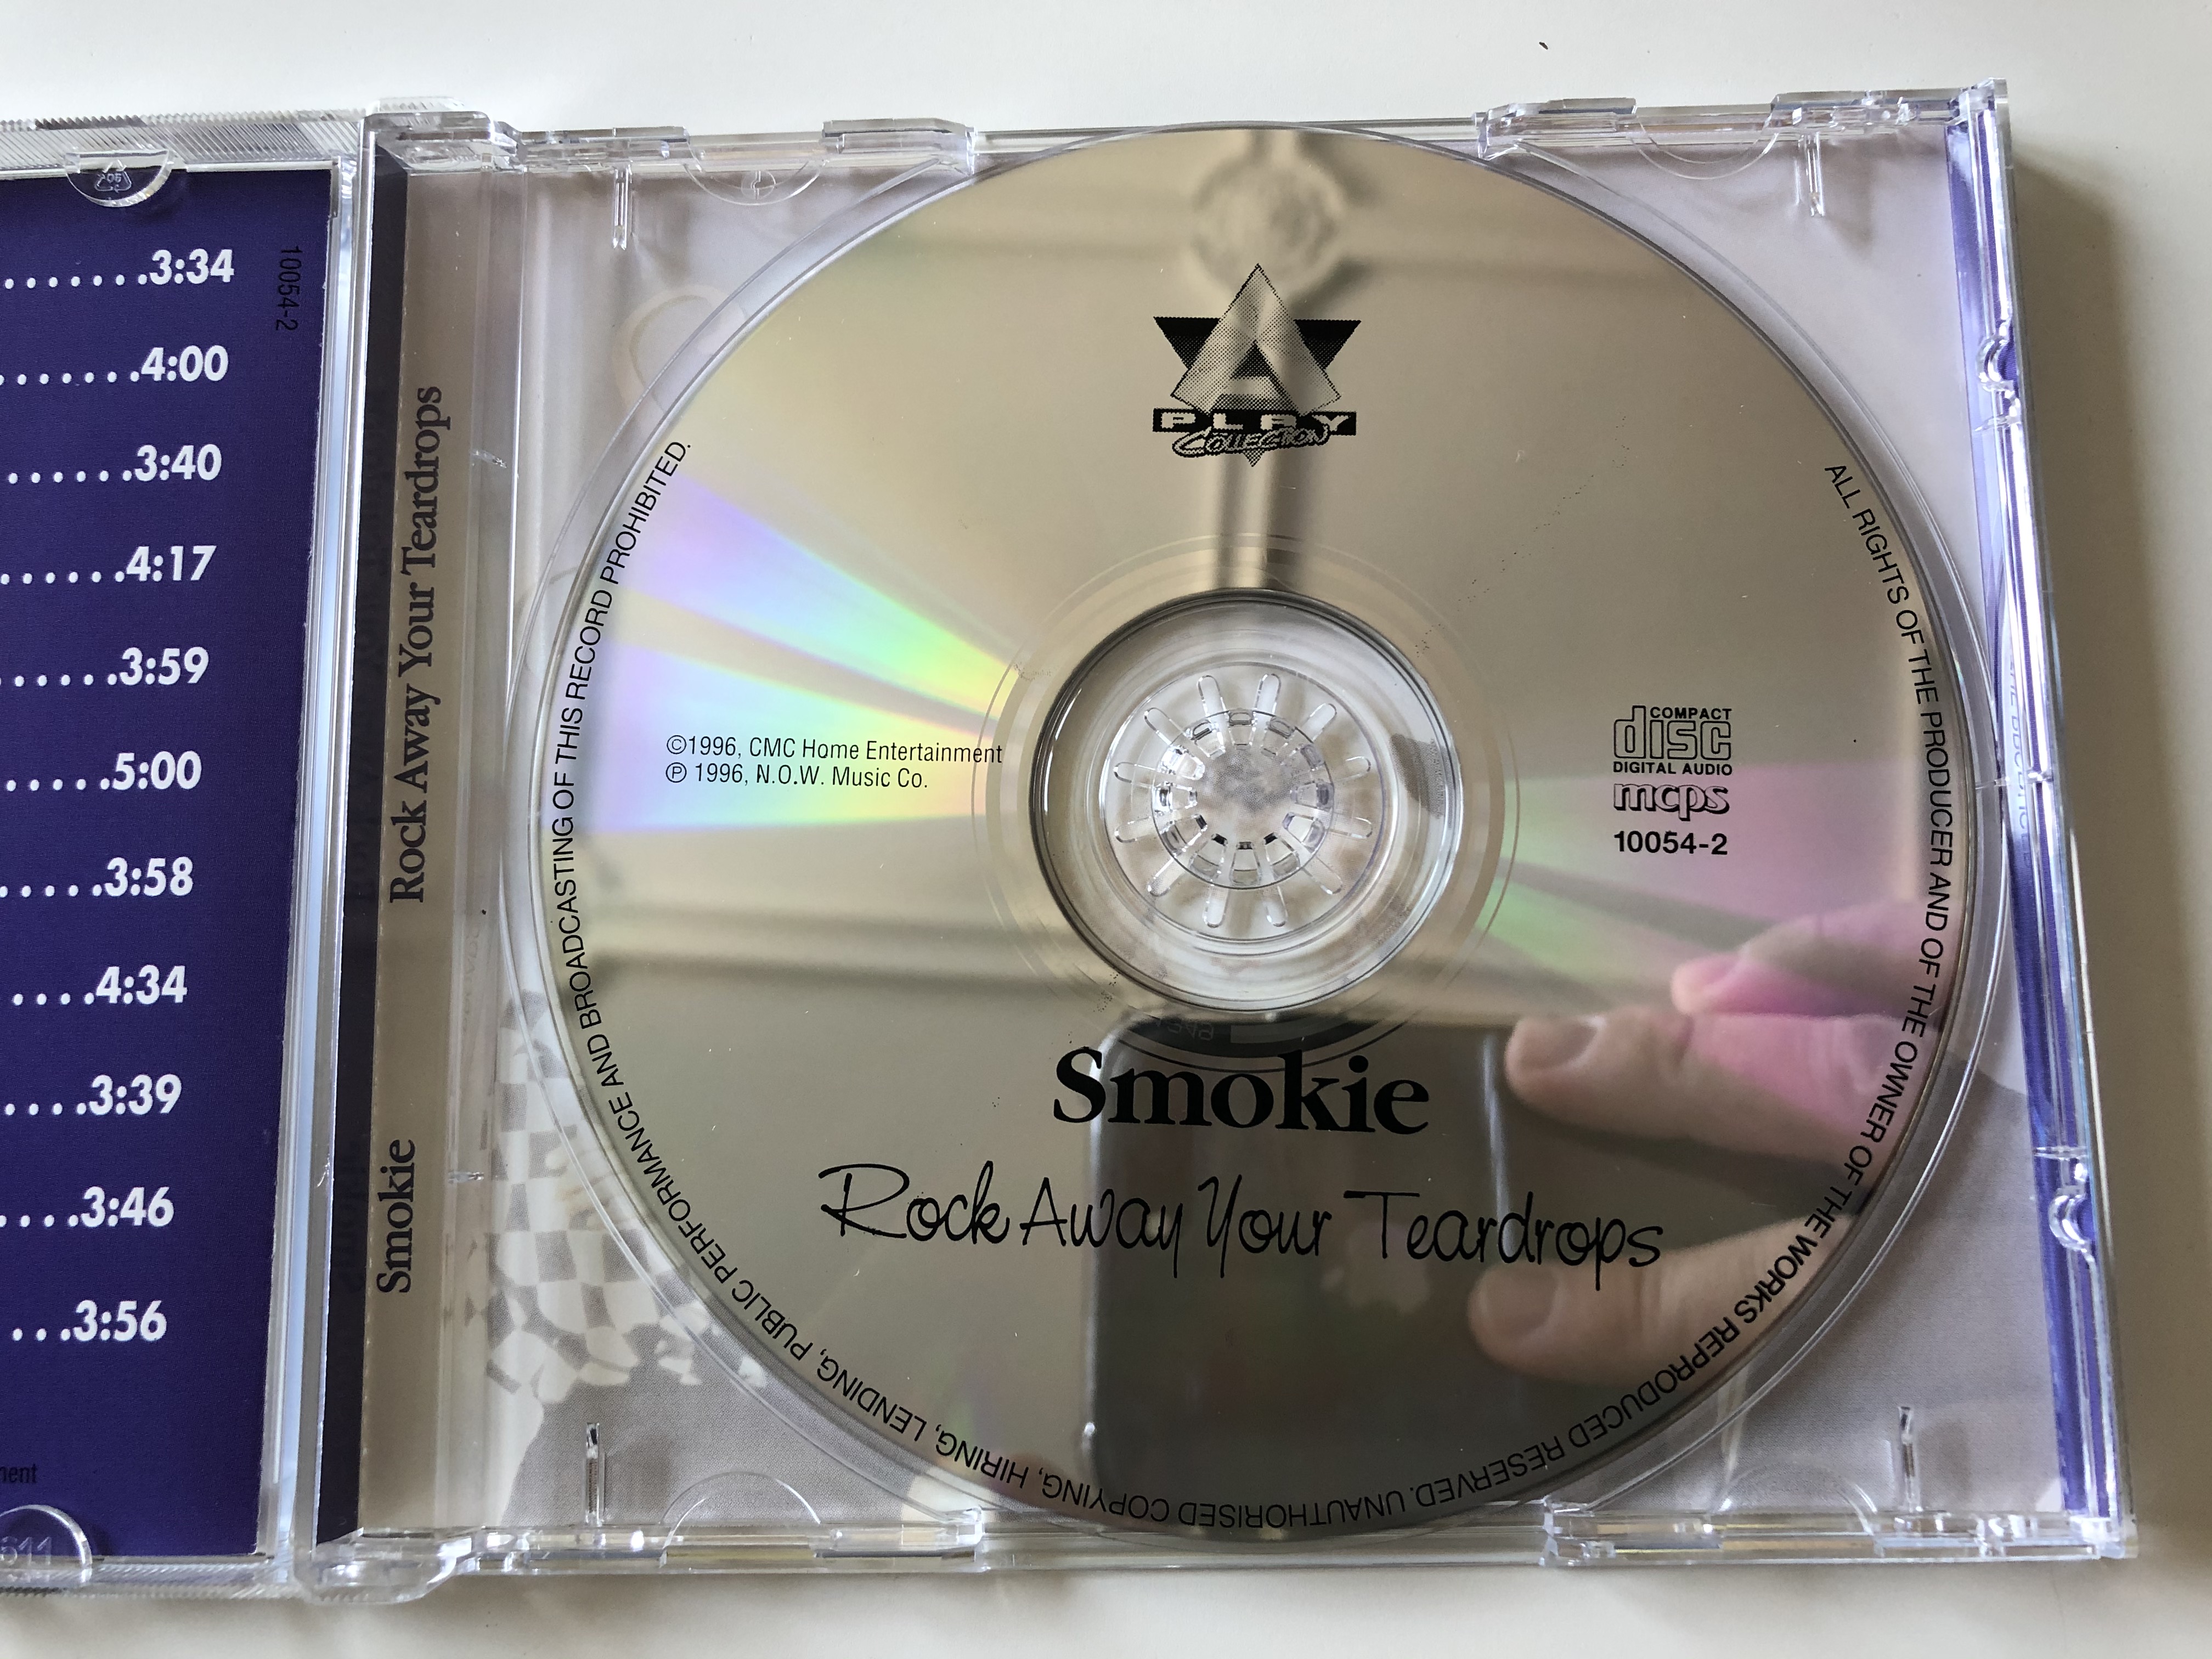 smokie-rock-away-your-teardrops-cmc-home-entertainment-audio-cd-1996-10054-2-3-.jpg